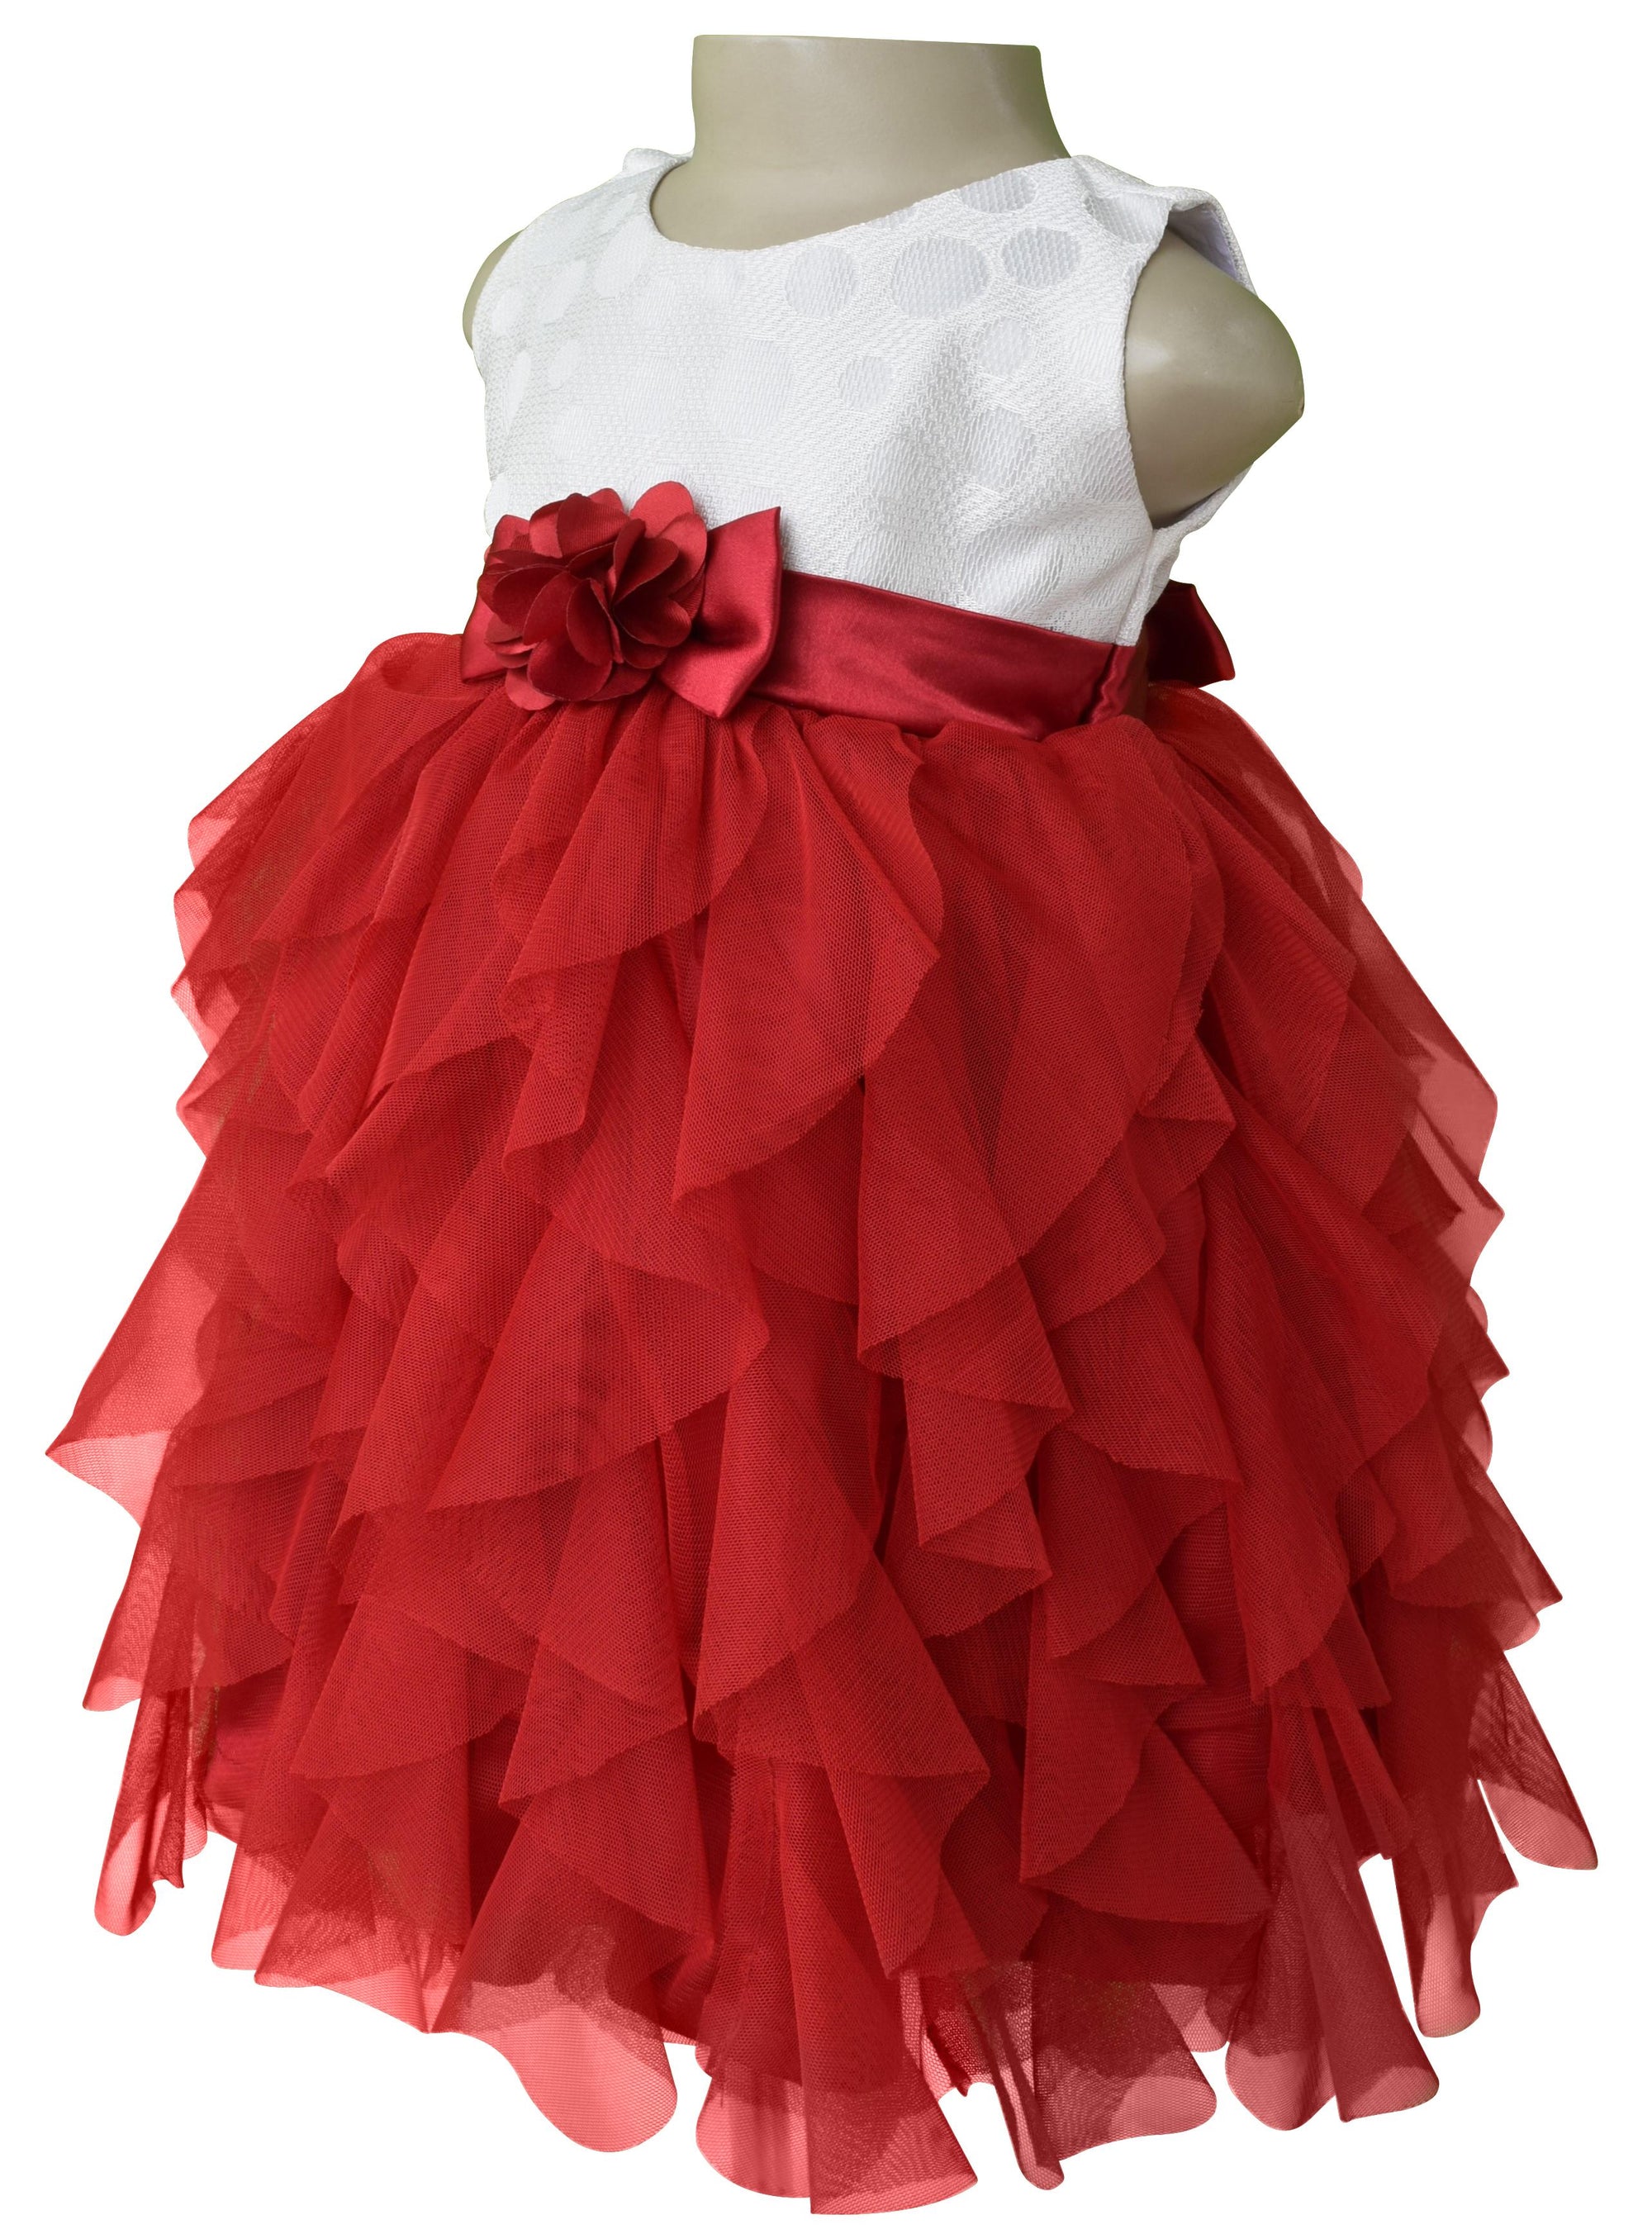 Party dress for girls_Faye Ivory & Maroon Waterfall Dress